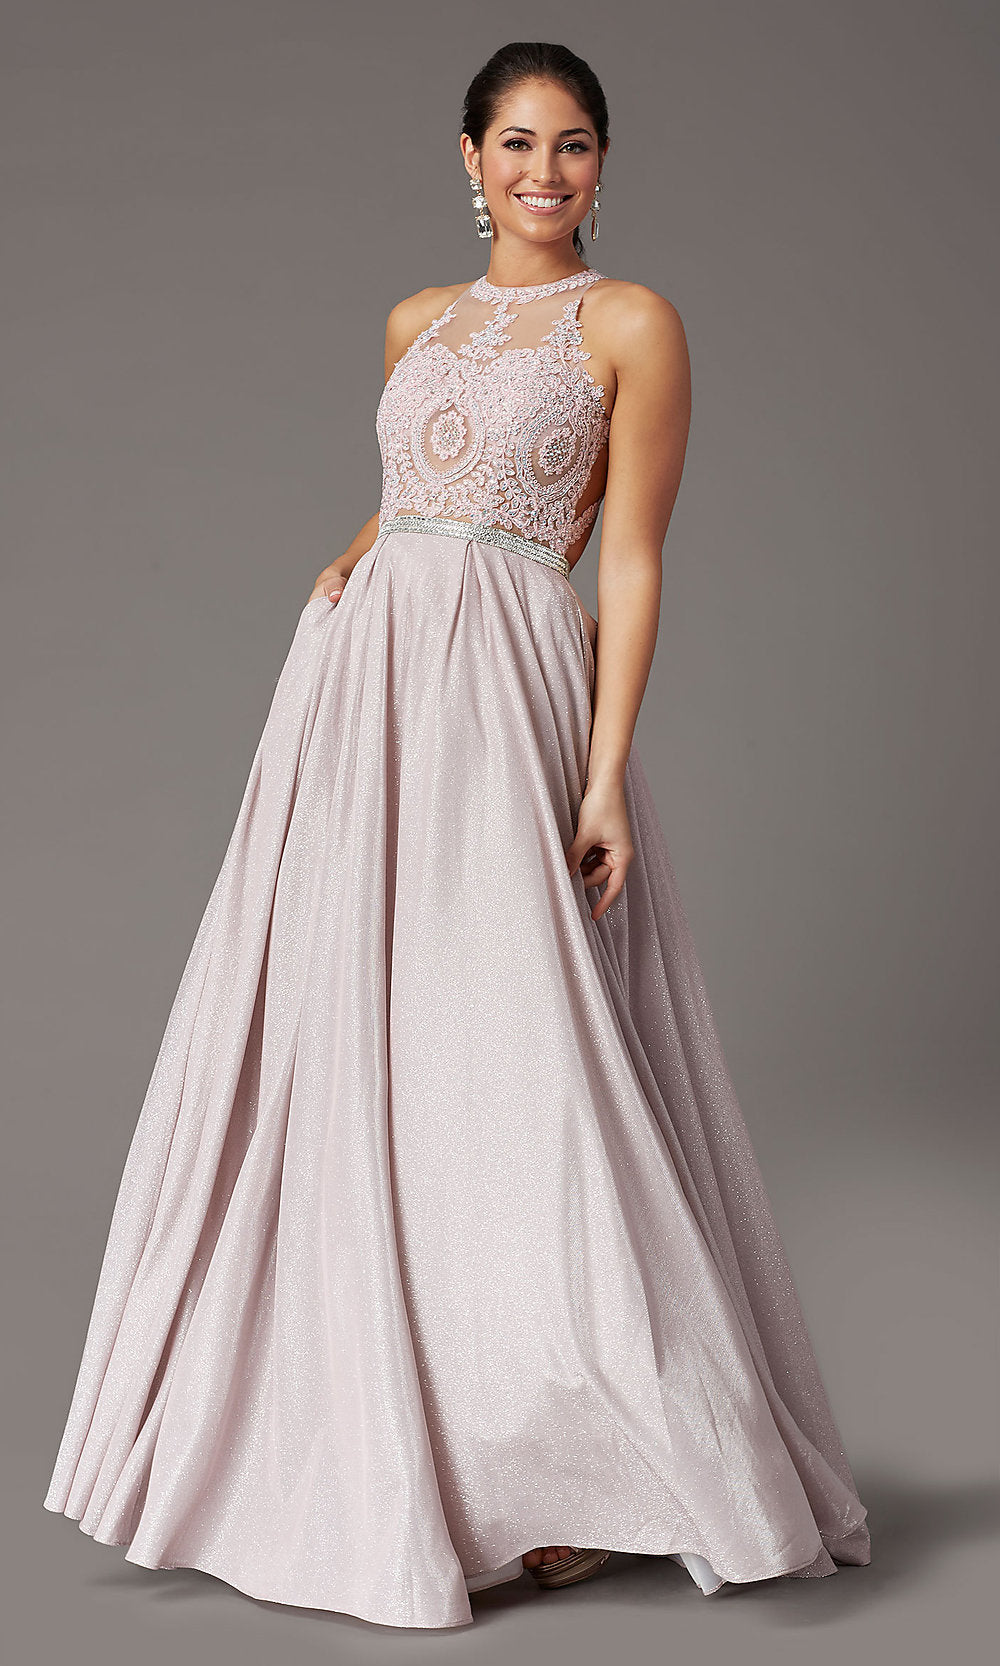  Embellished-Bodice Long Glitter-Knit Prom Dress